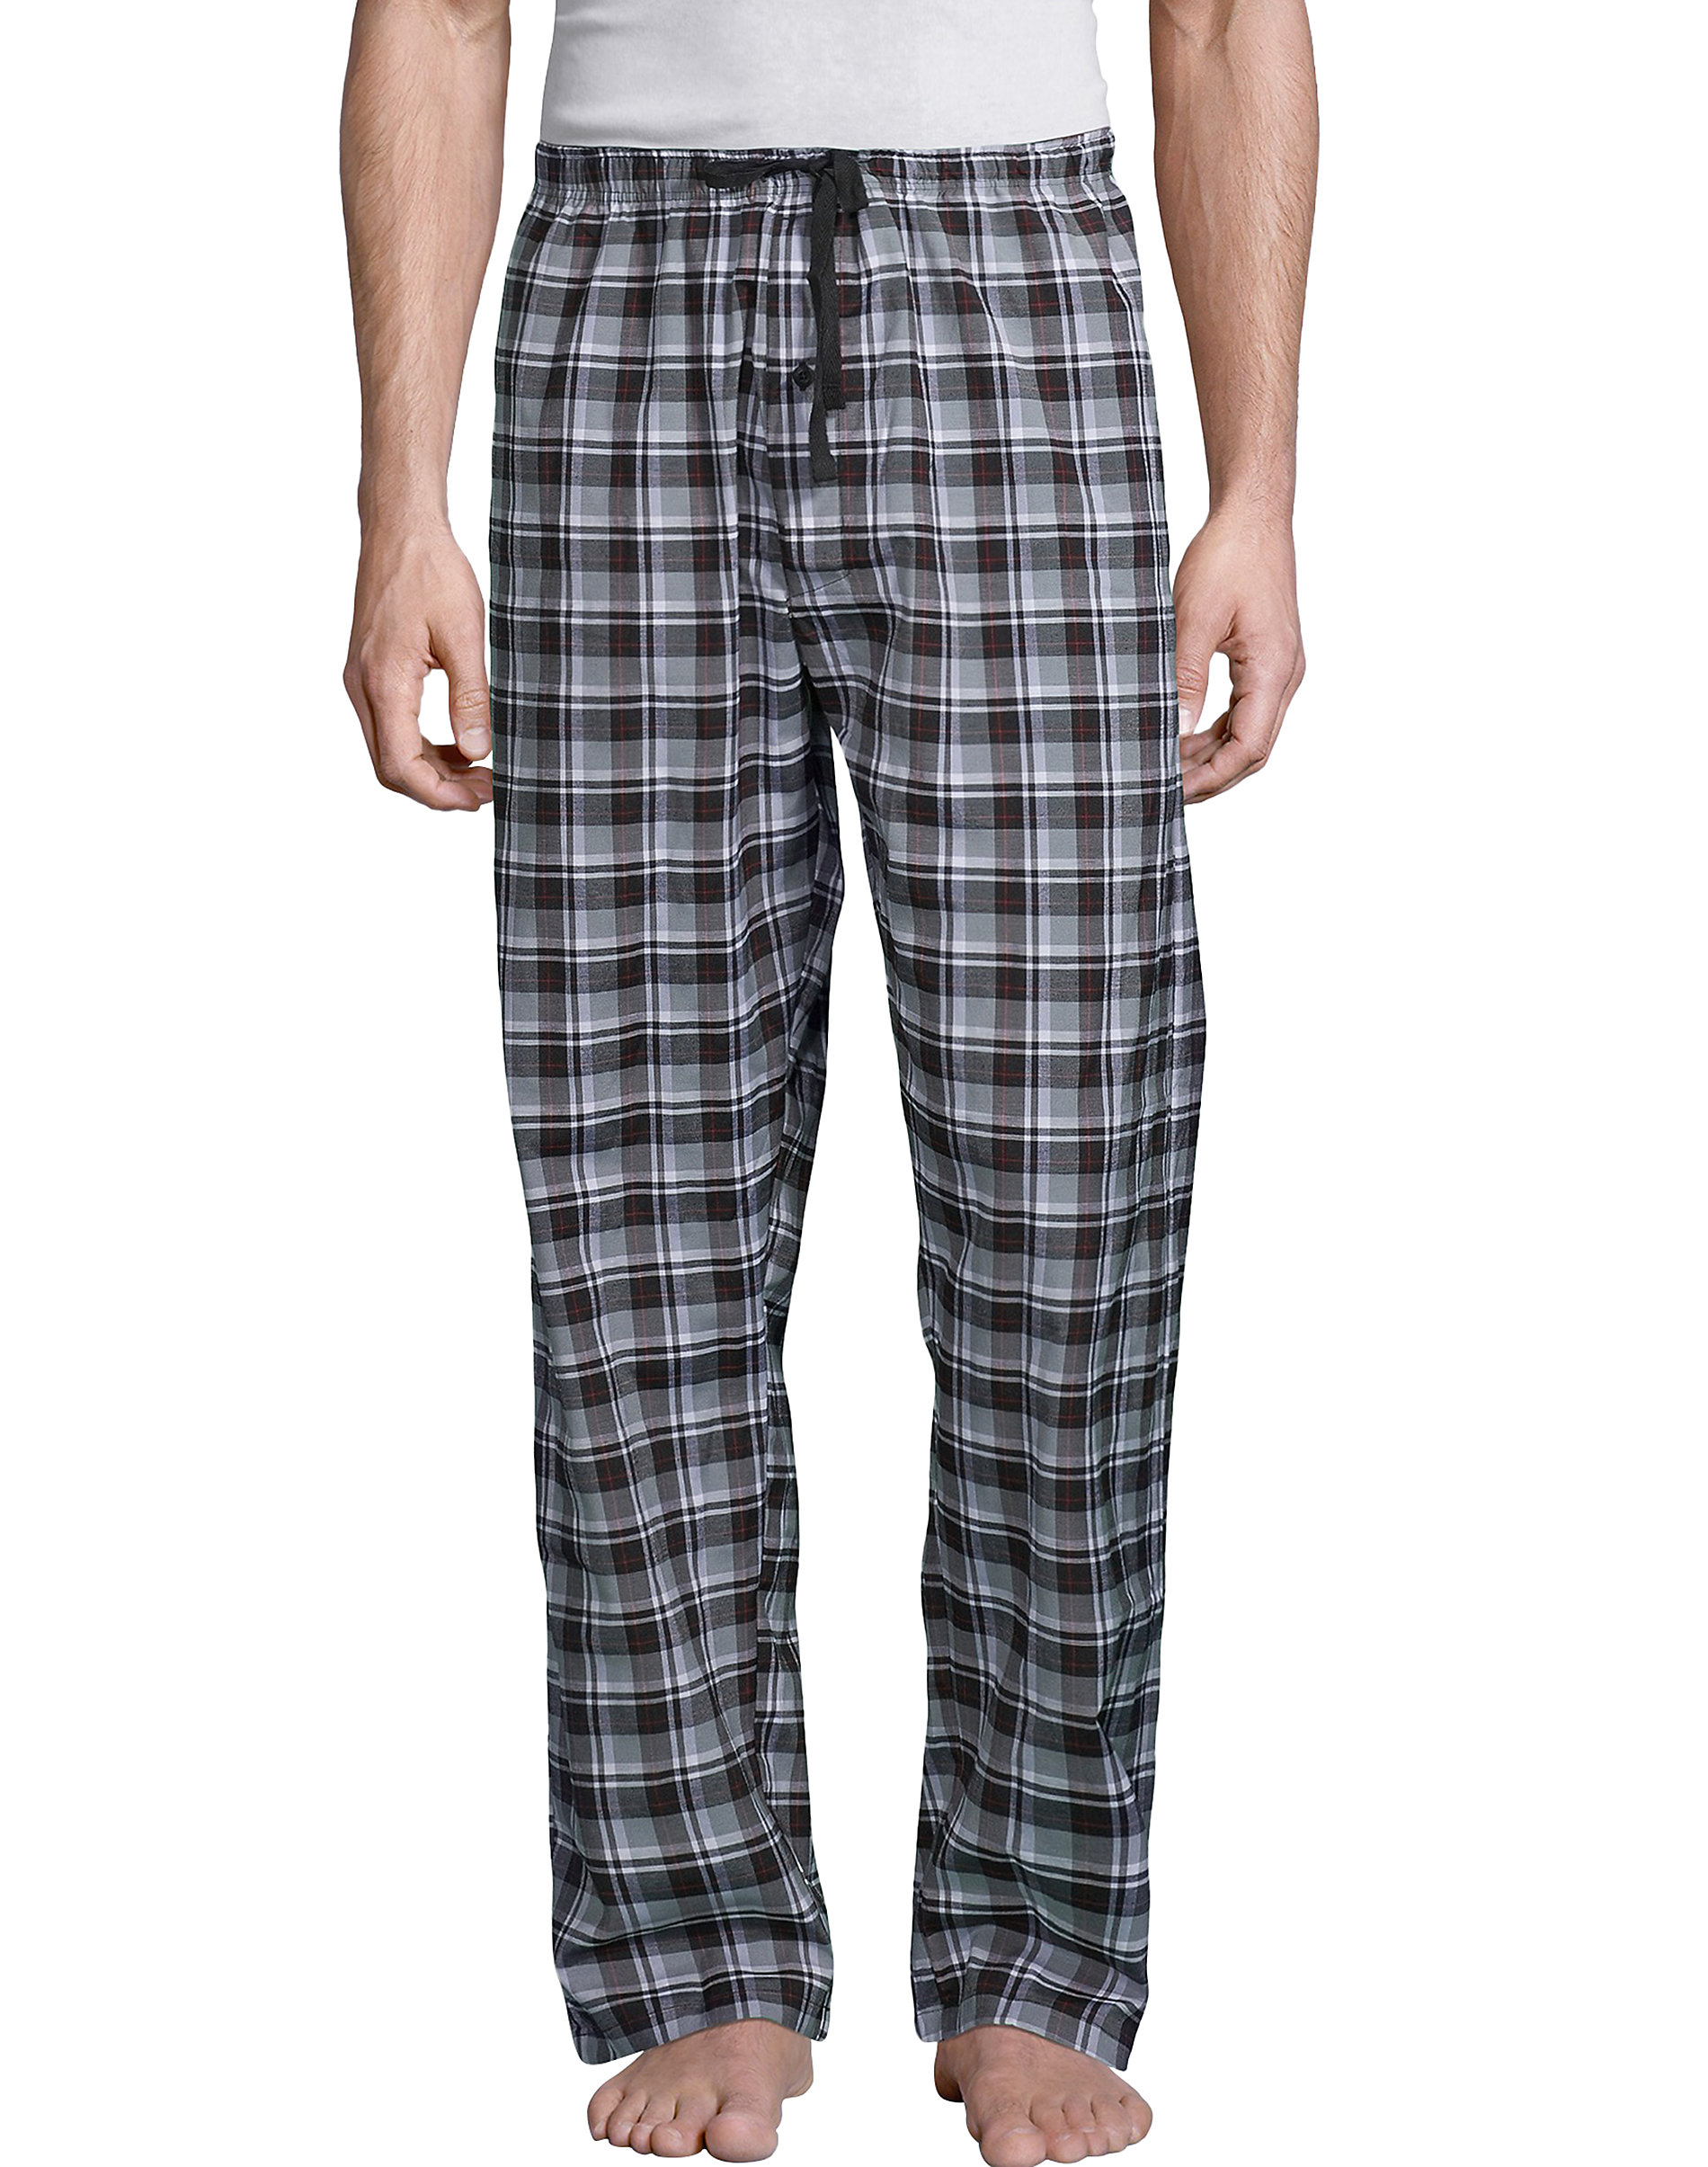 Hane Tagless Pajamas Knit T Top & Woven Plaid Pants